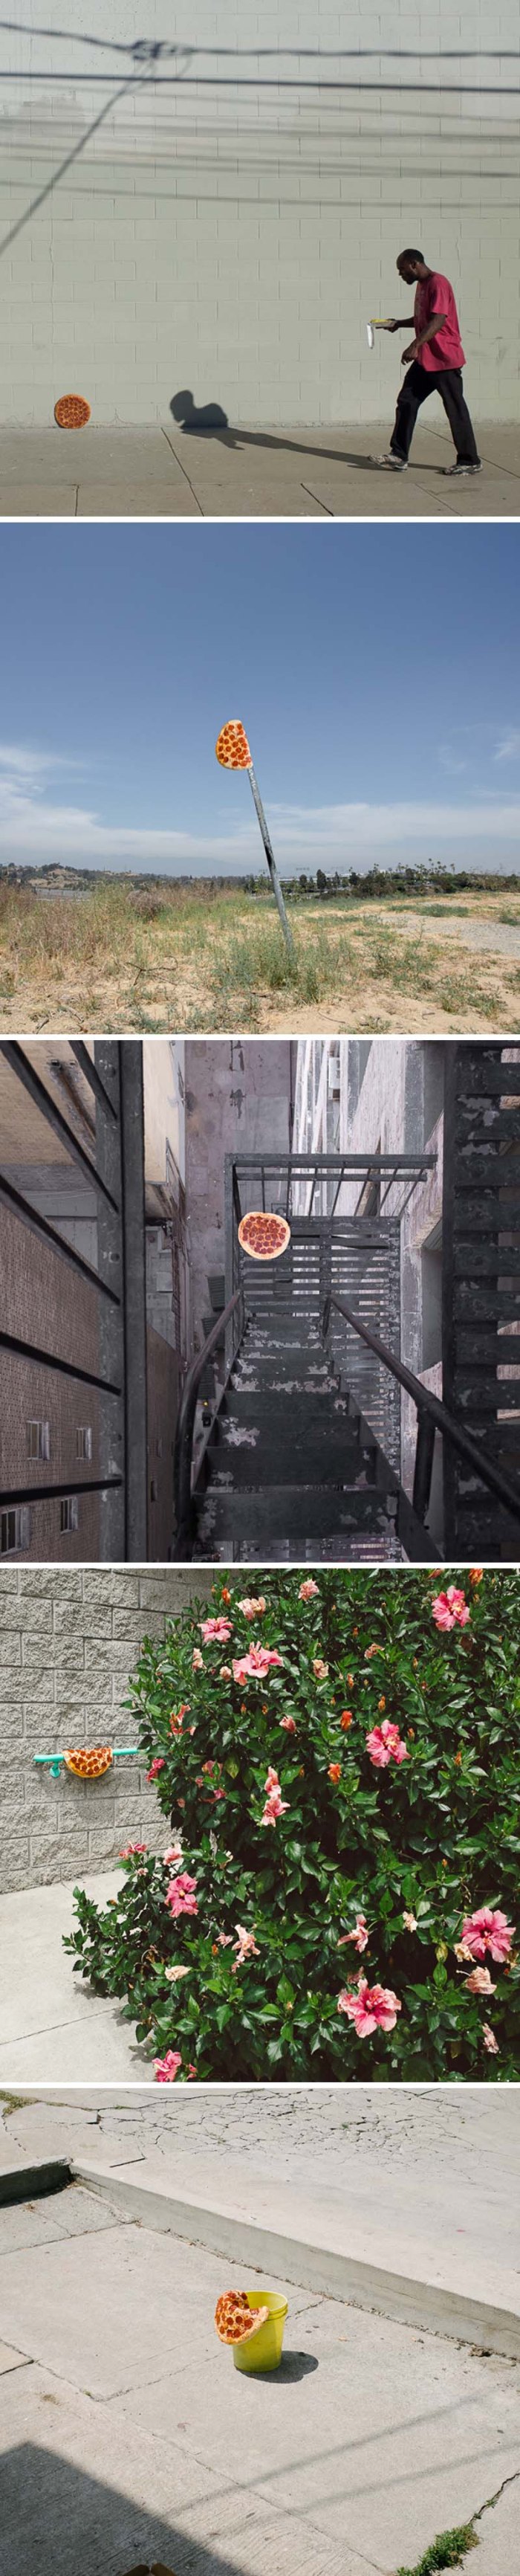 Pizza in the Wild, instagram photo series, Jonpaul Douglass, Humorous photos, pizza pies. Little Caesars pizza, Street photography